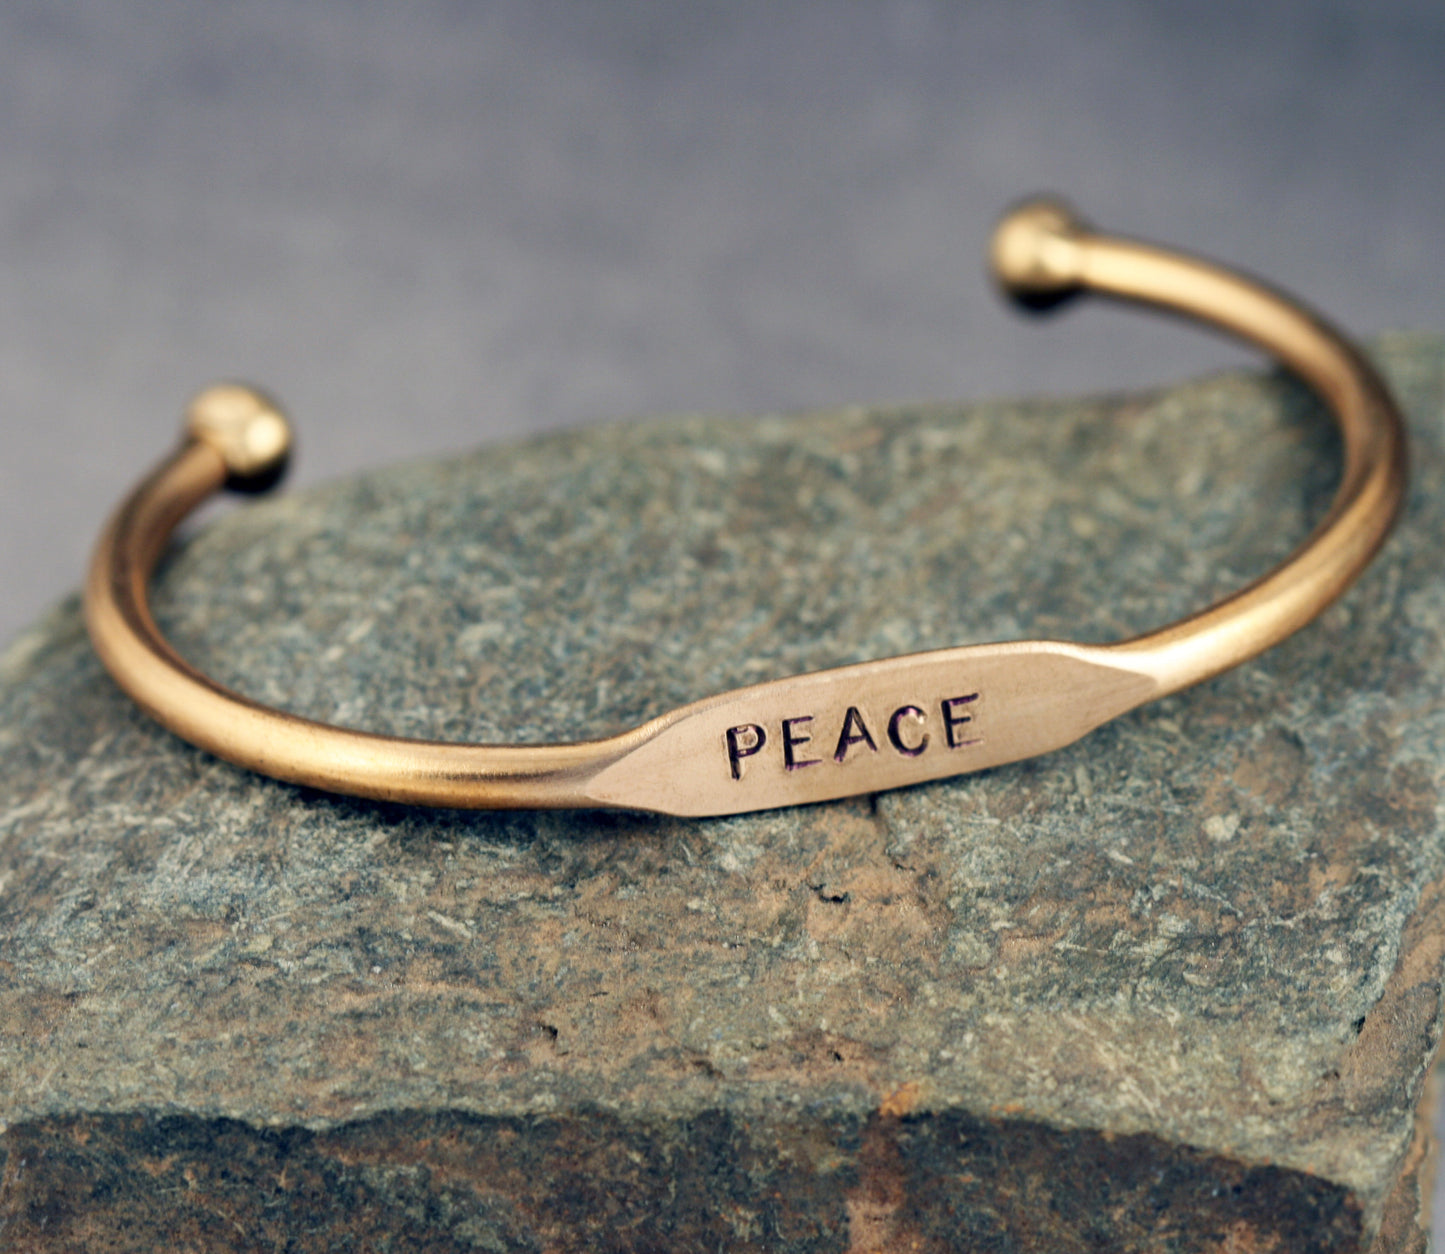 Peace Affirmation Cuff Bracelet